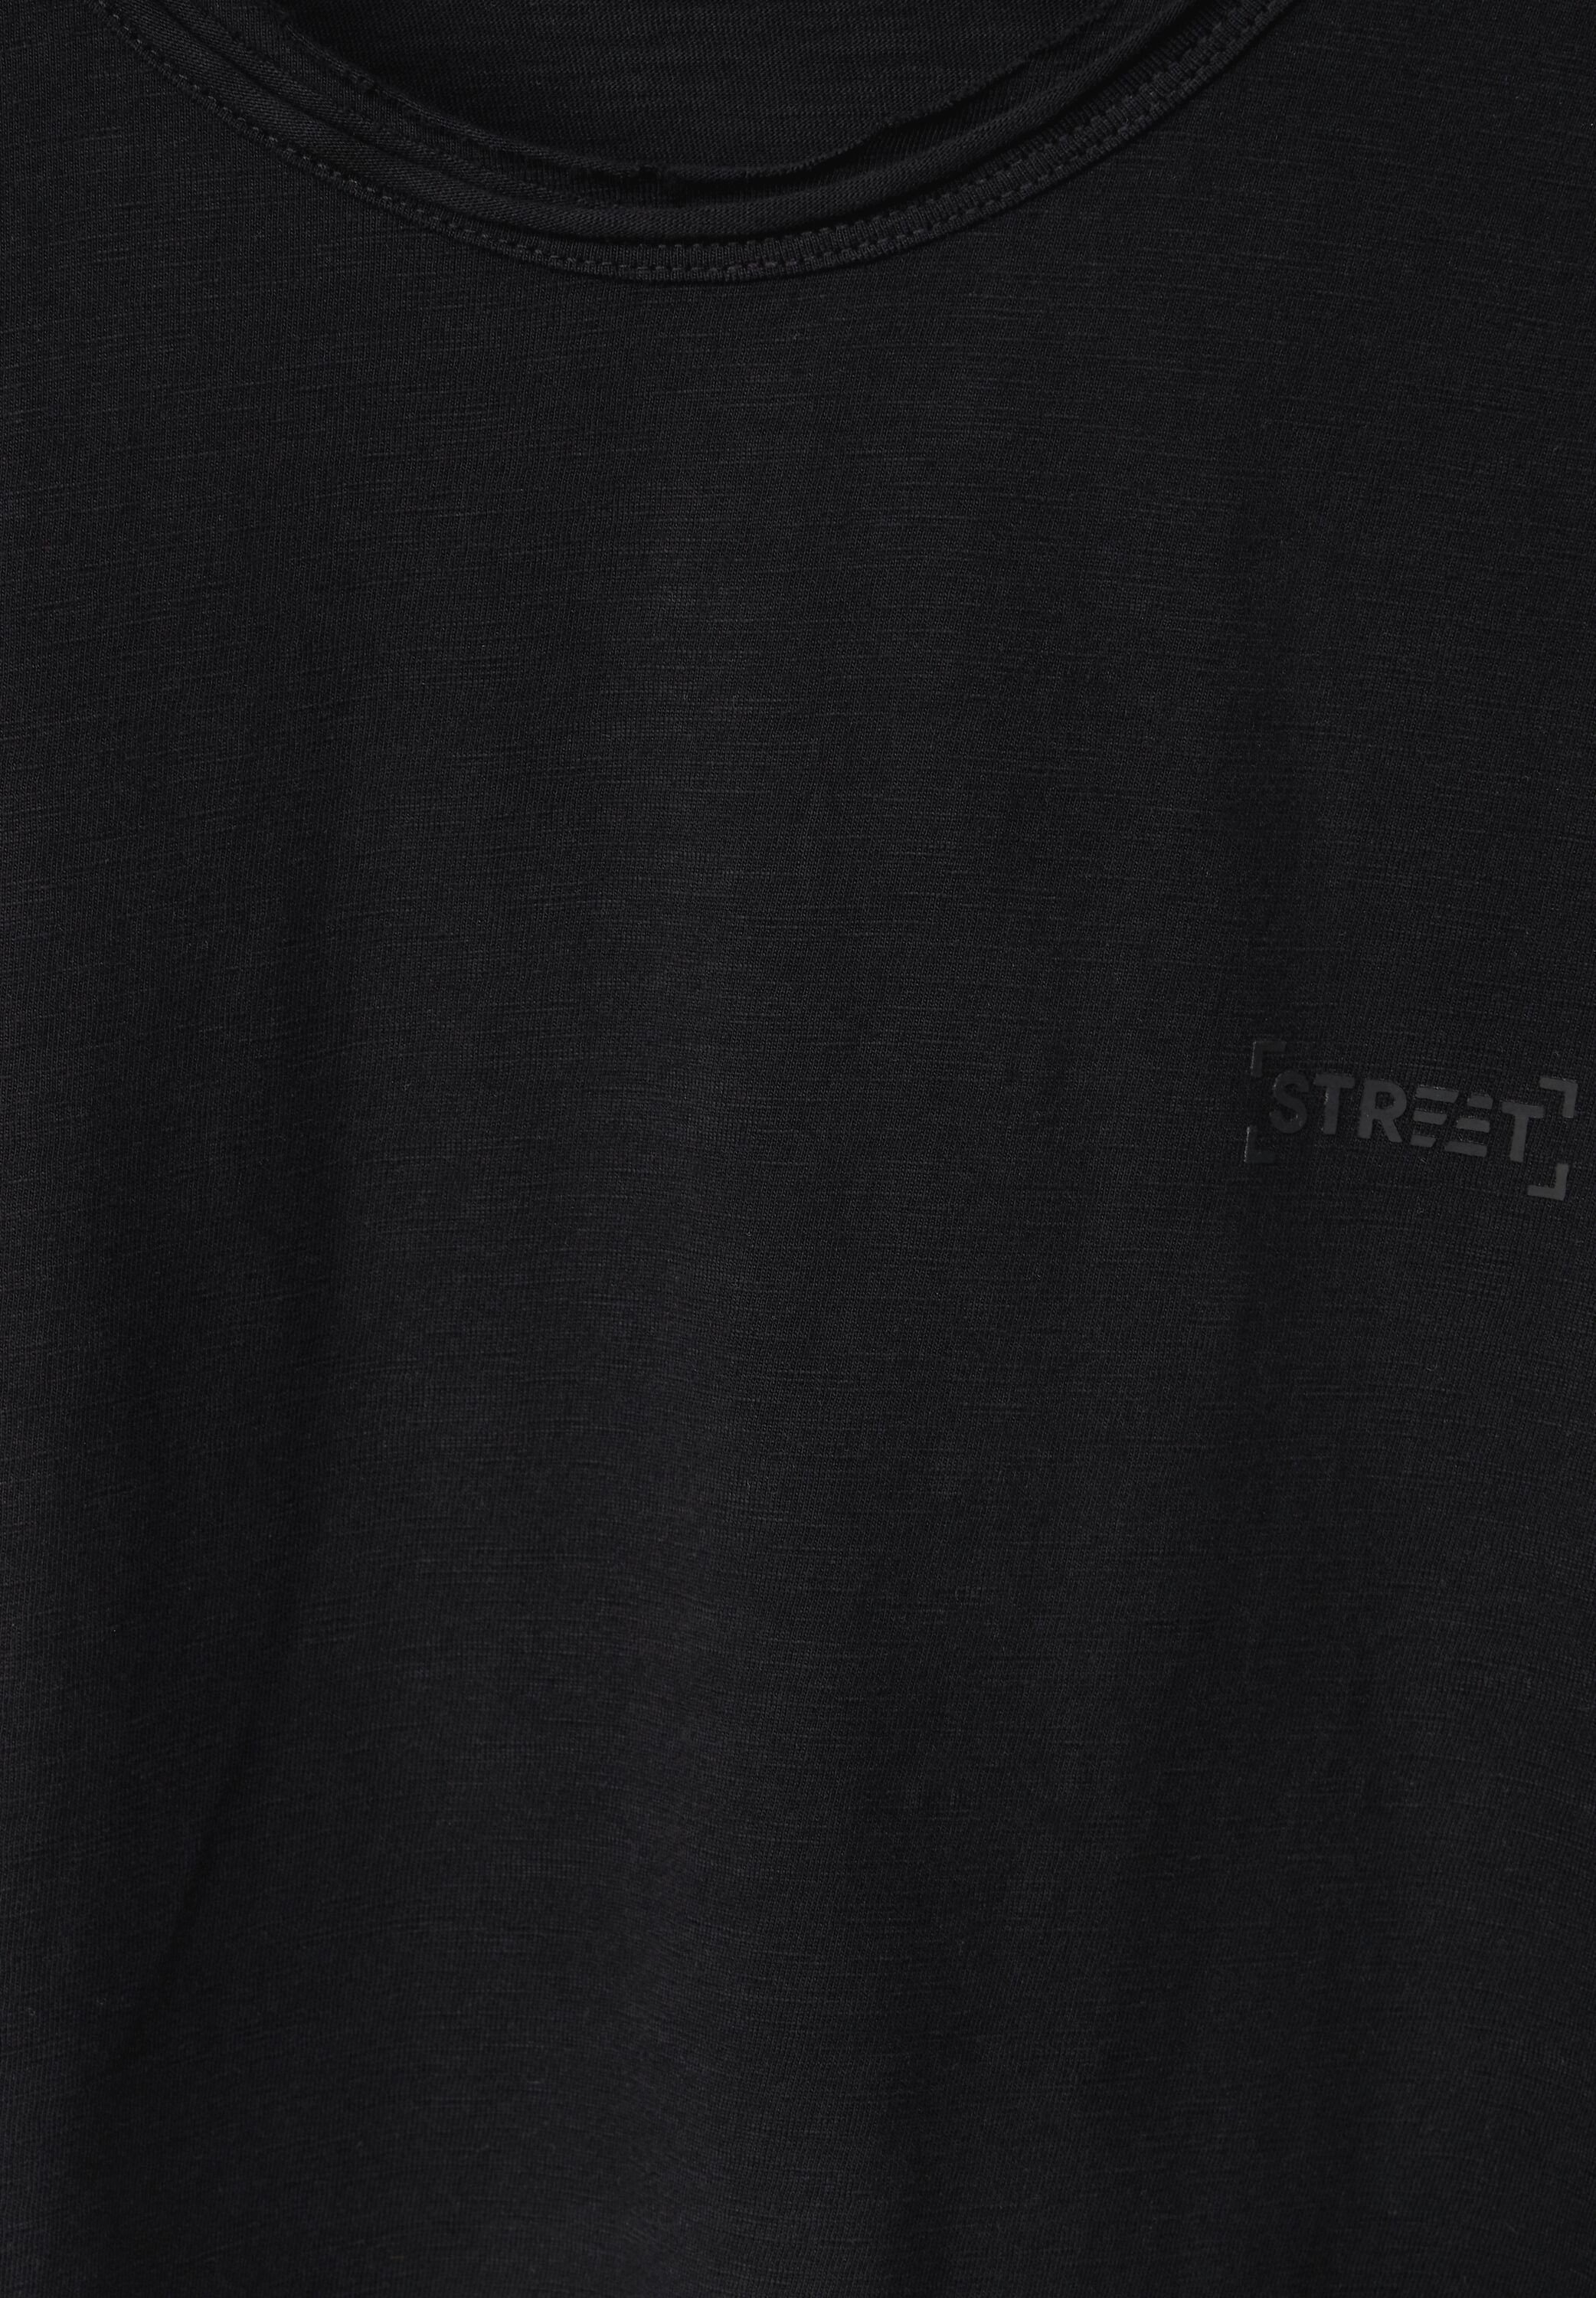 T-Shirt Black STREET MEN ONE